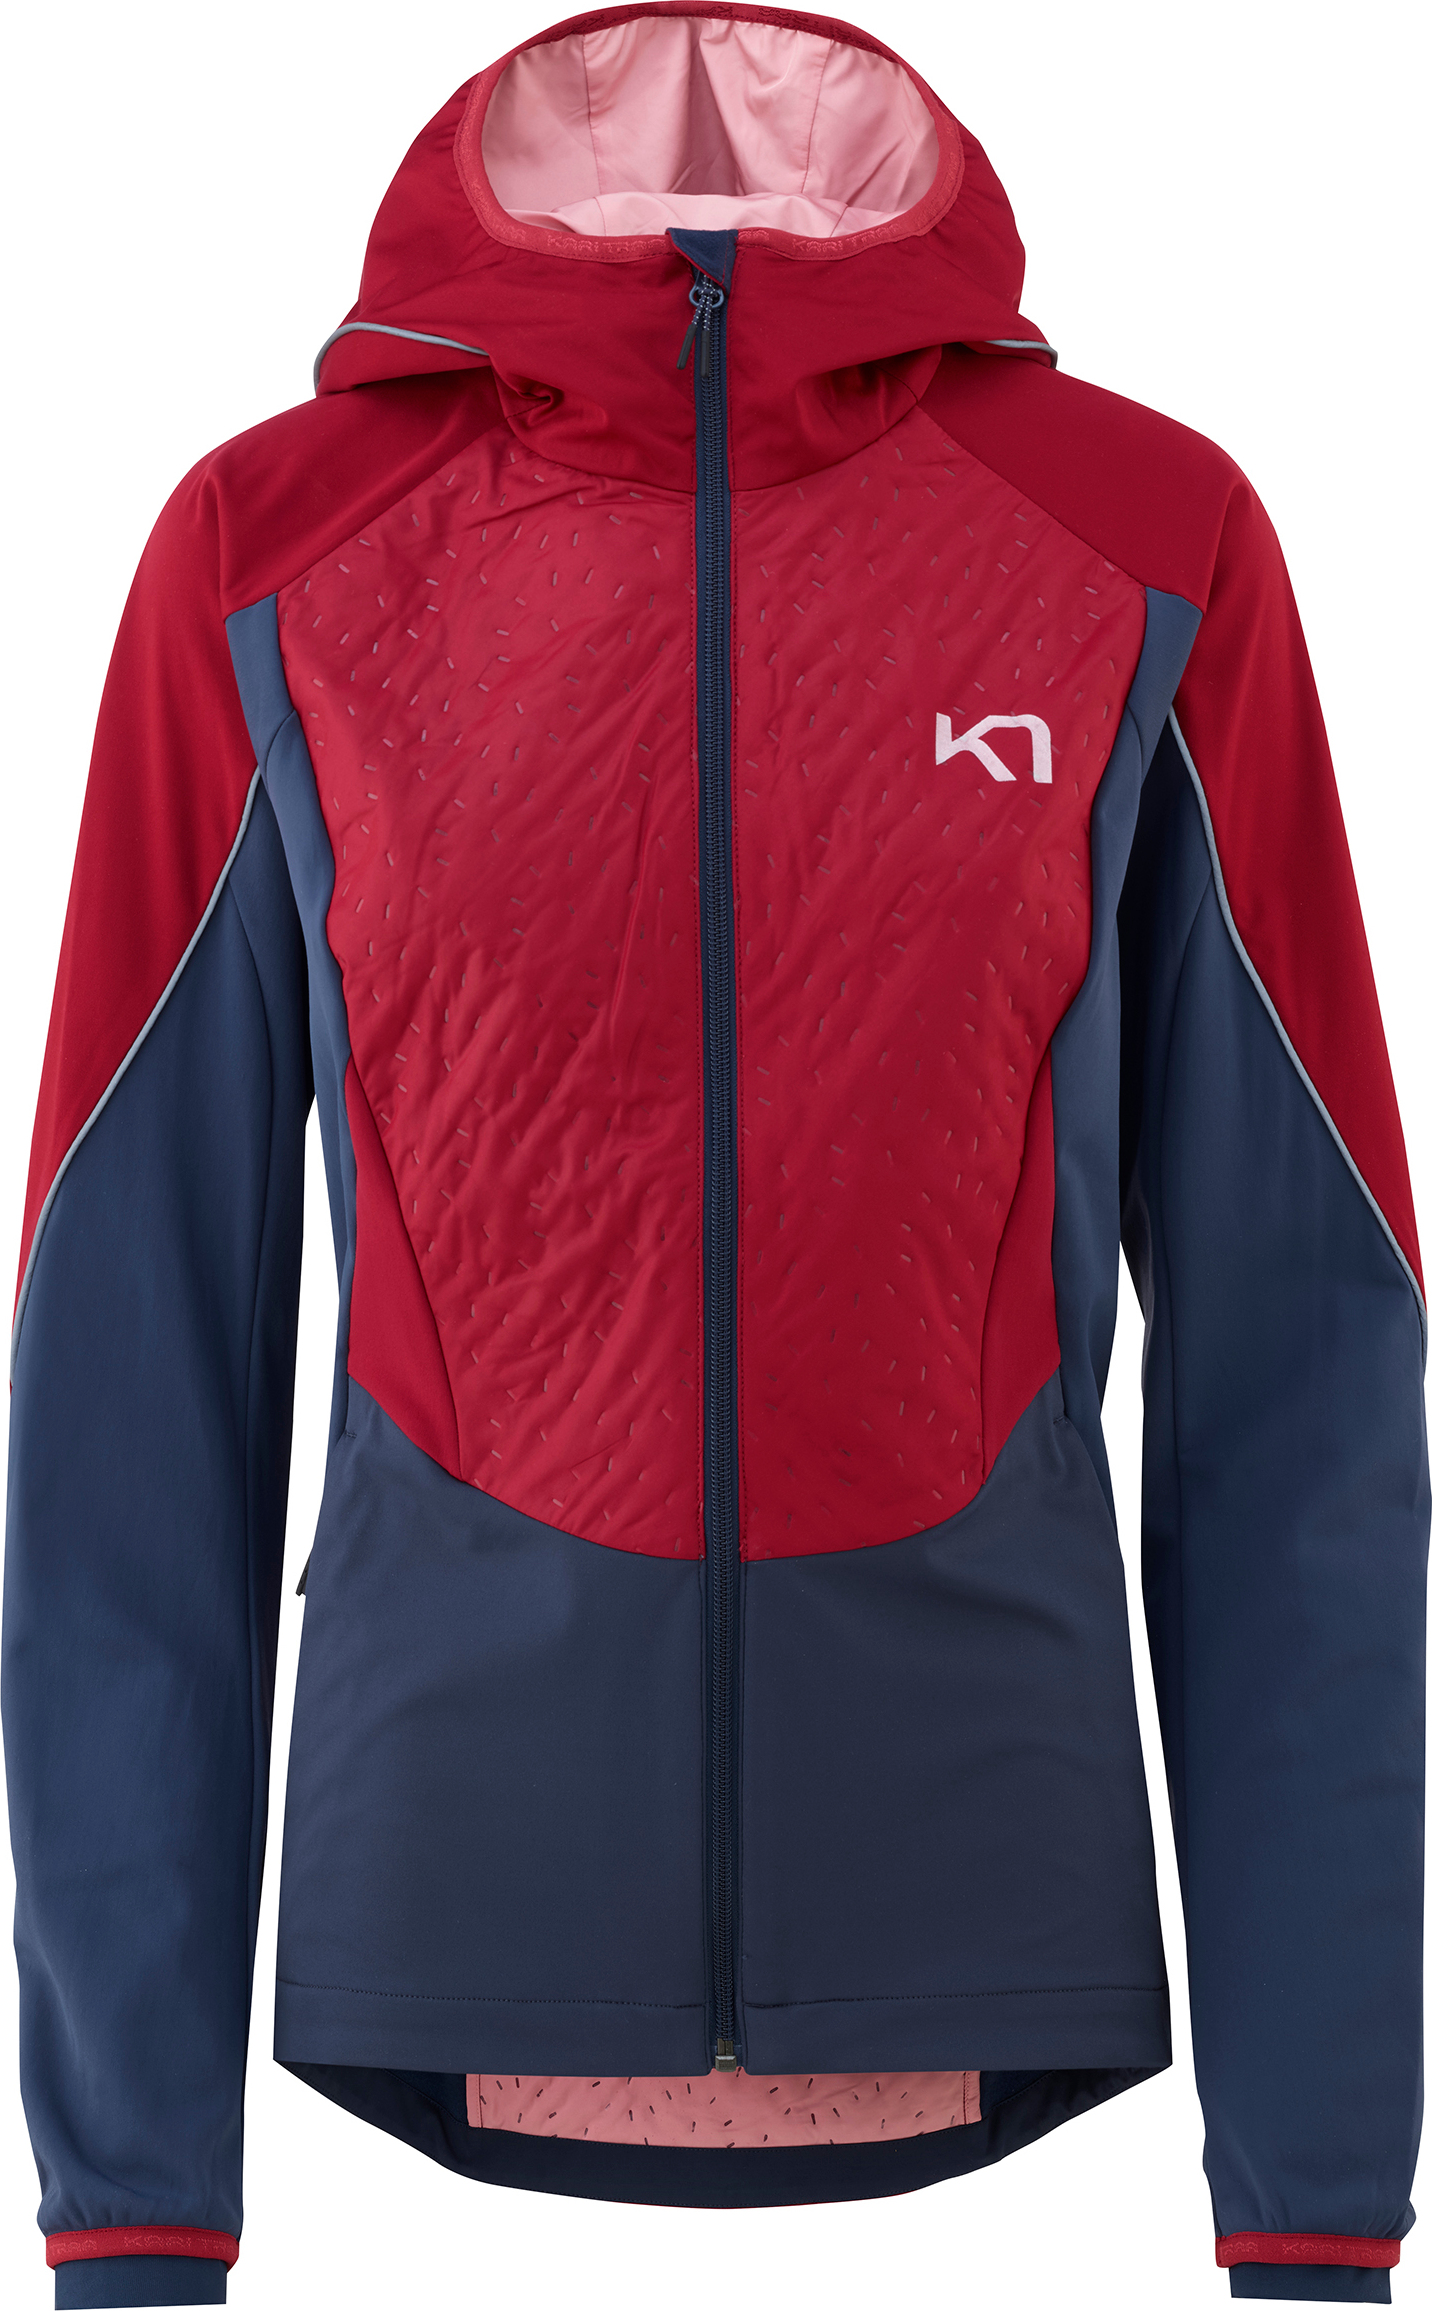 Kari Traa Women’s Tirill 2.0 Jacket RED